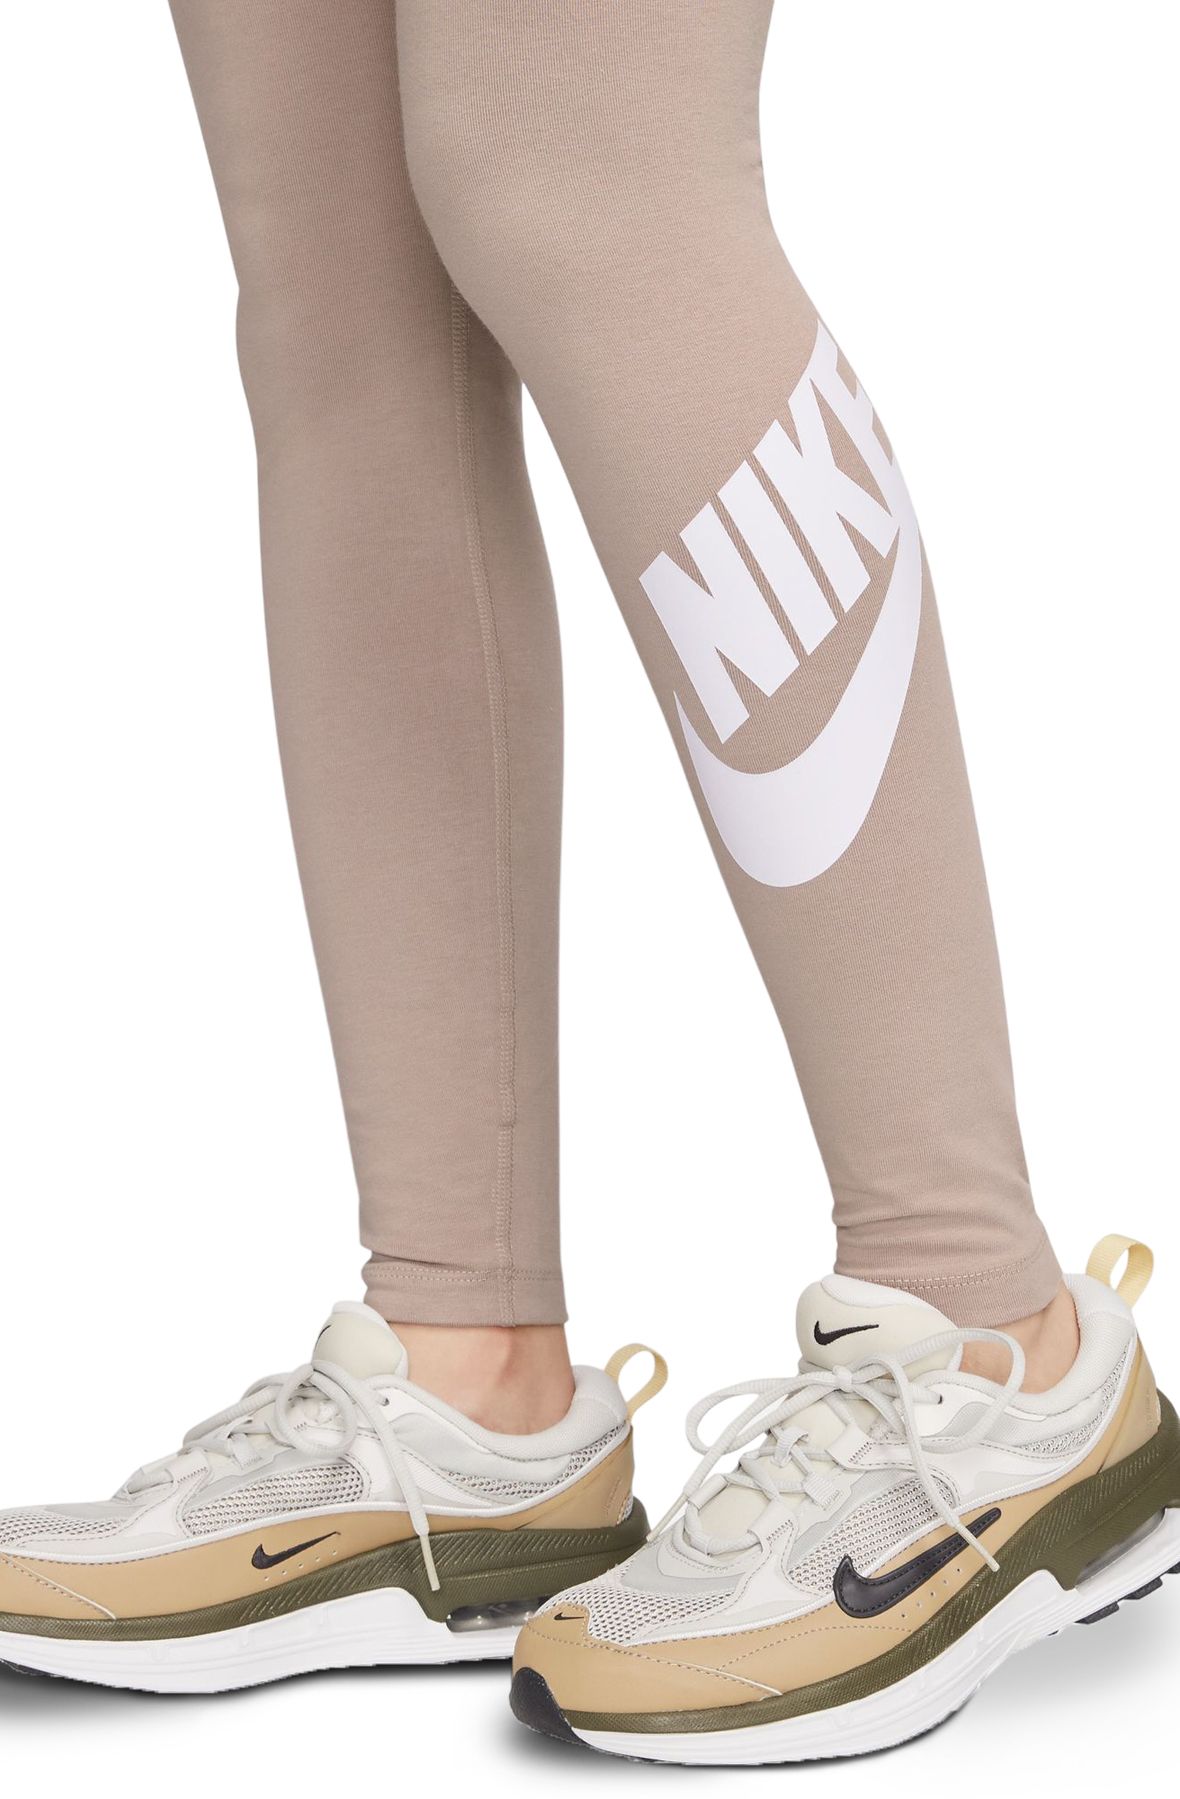 Nike - Women - Essentials Futura Legging - Madder Root/White – Nohble